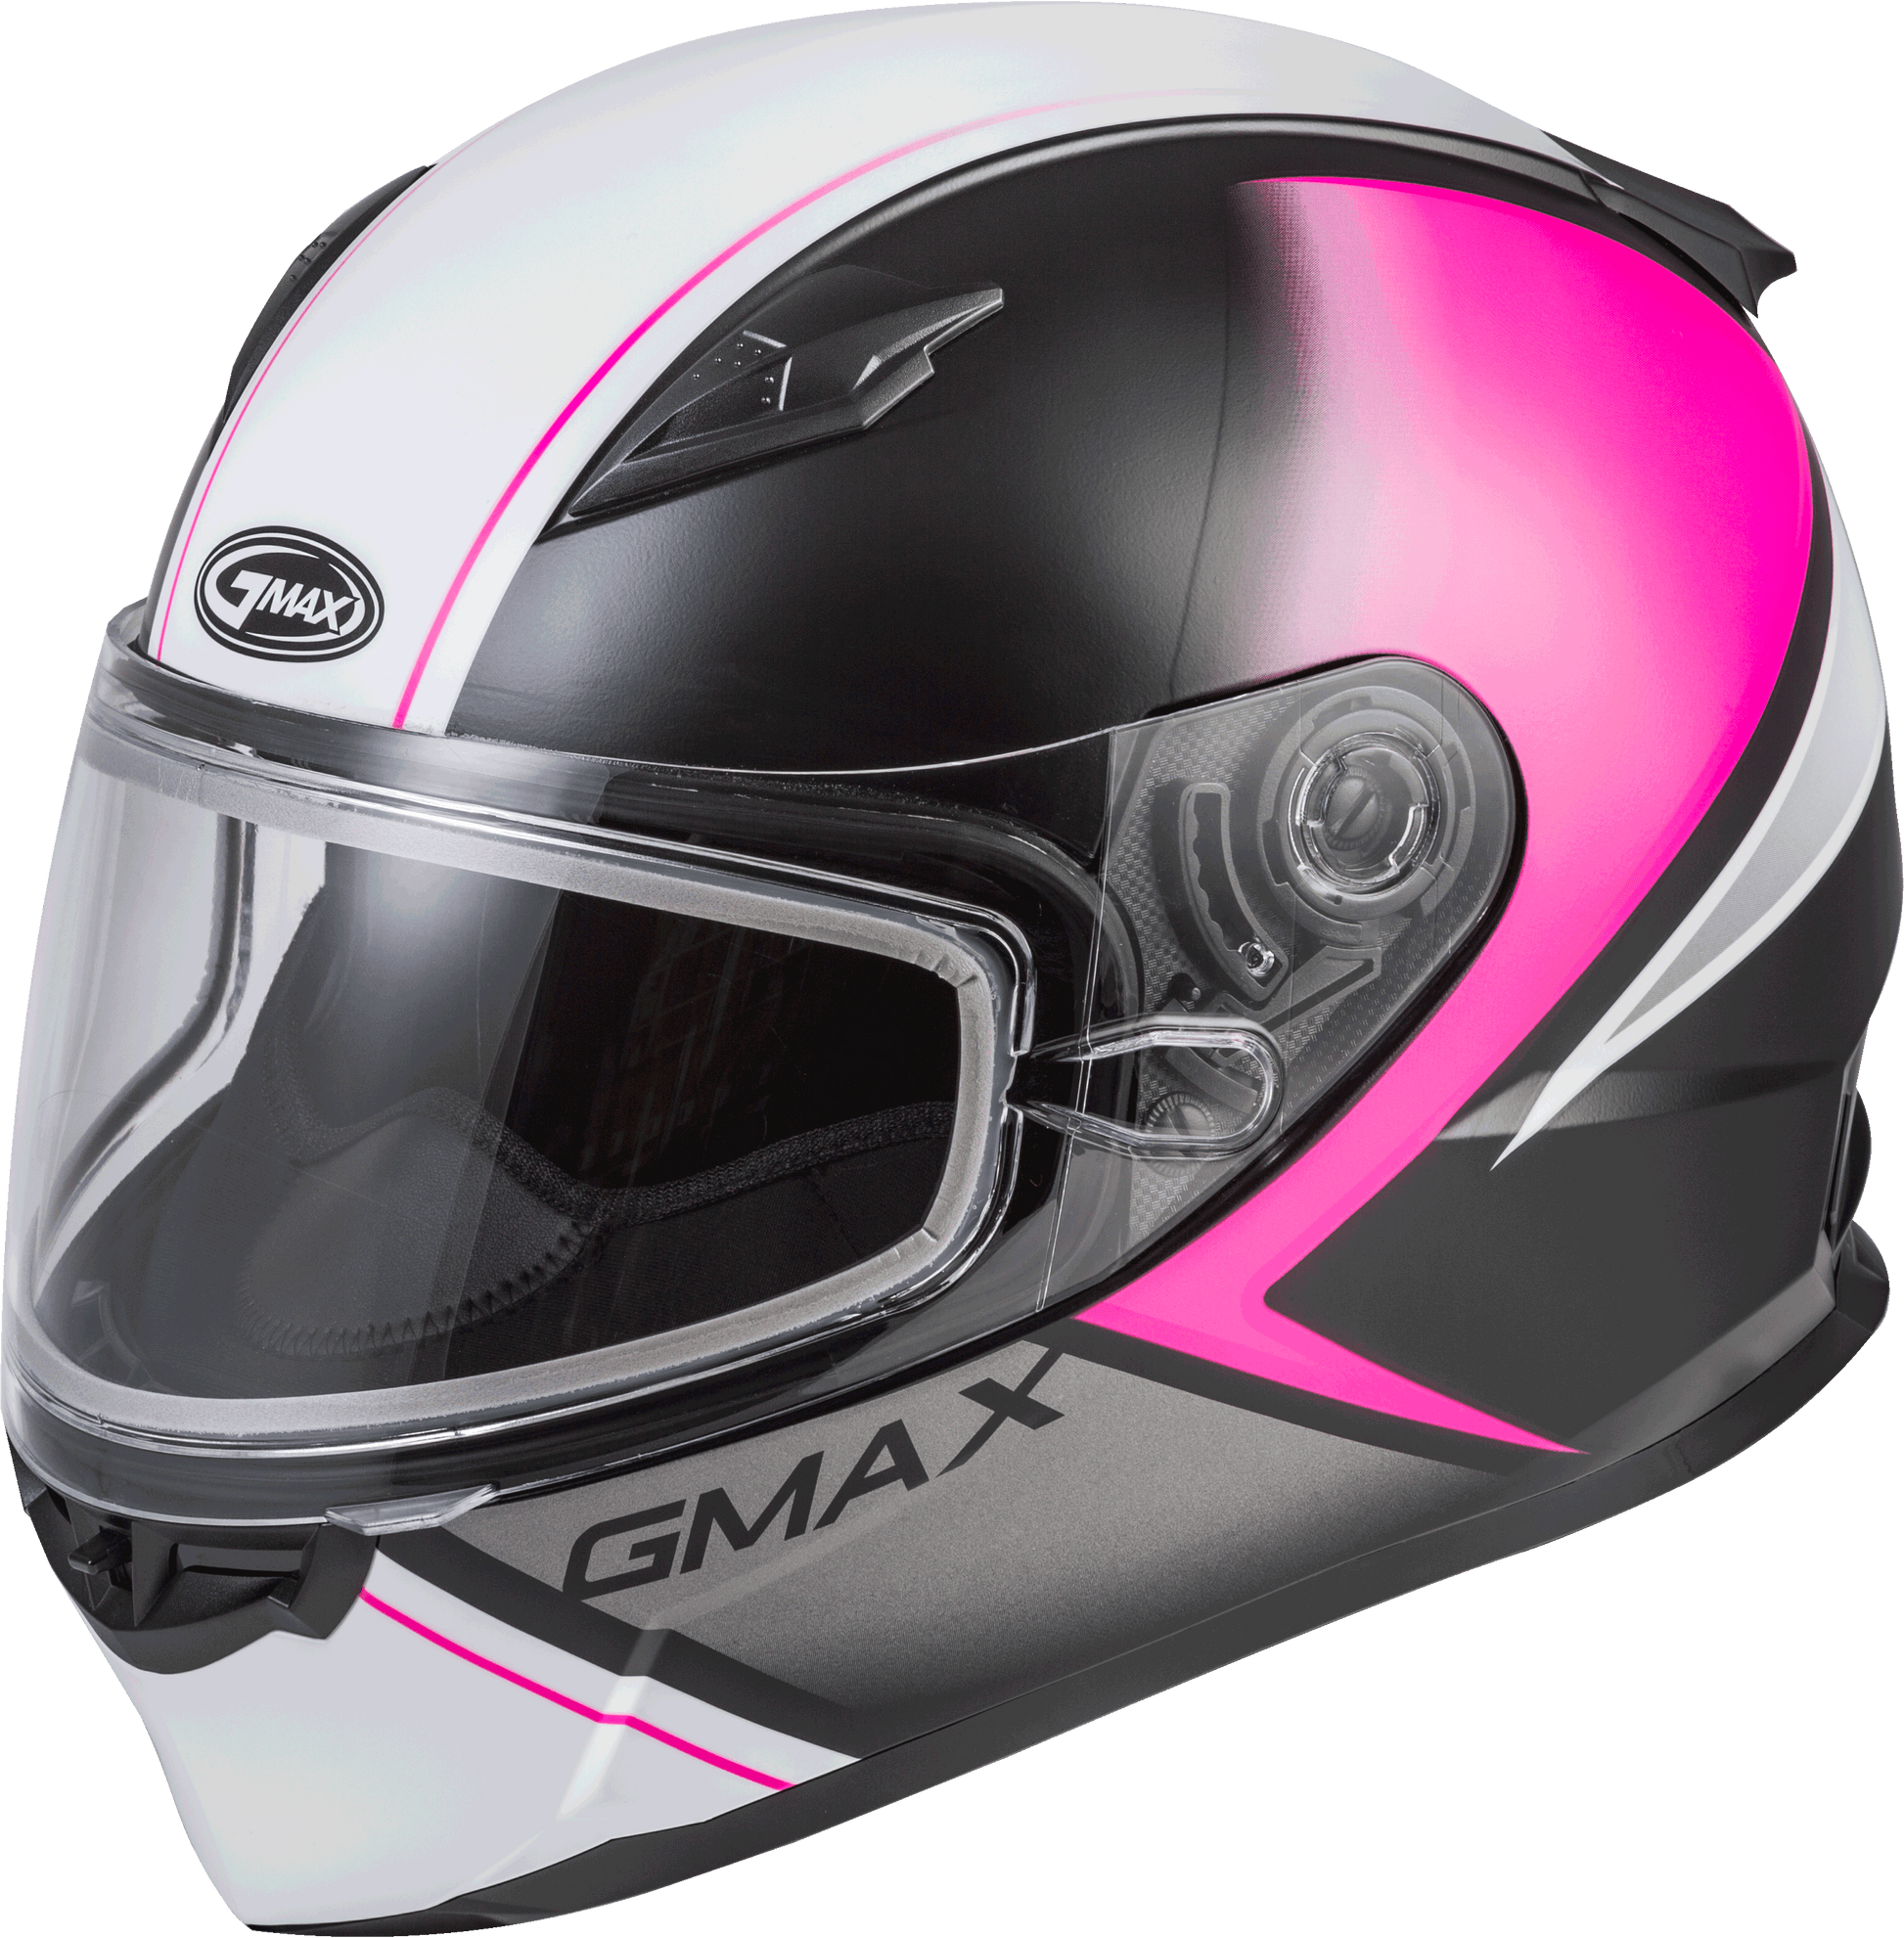 Gmax 72-6007 Youth GM-49Y 'Hail' Snow Helmet Matte Black/Pink/White